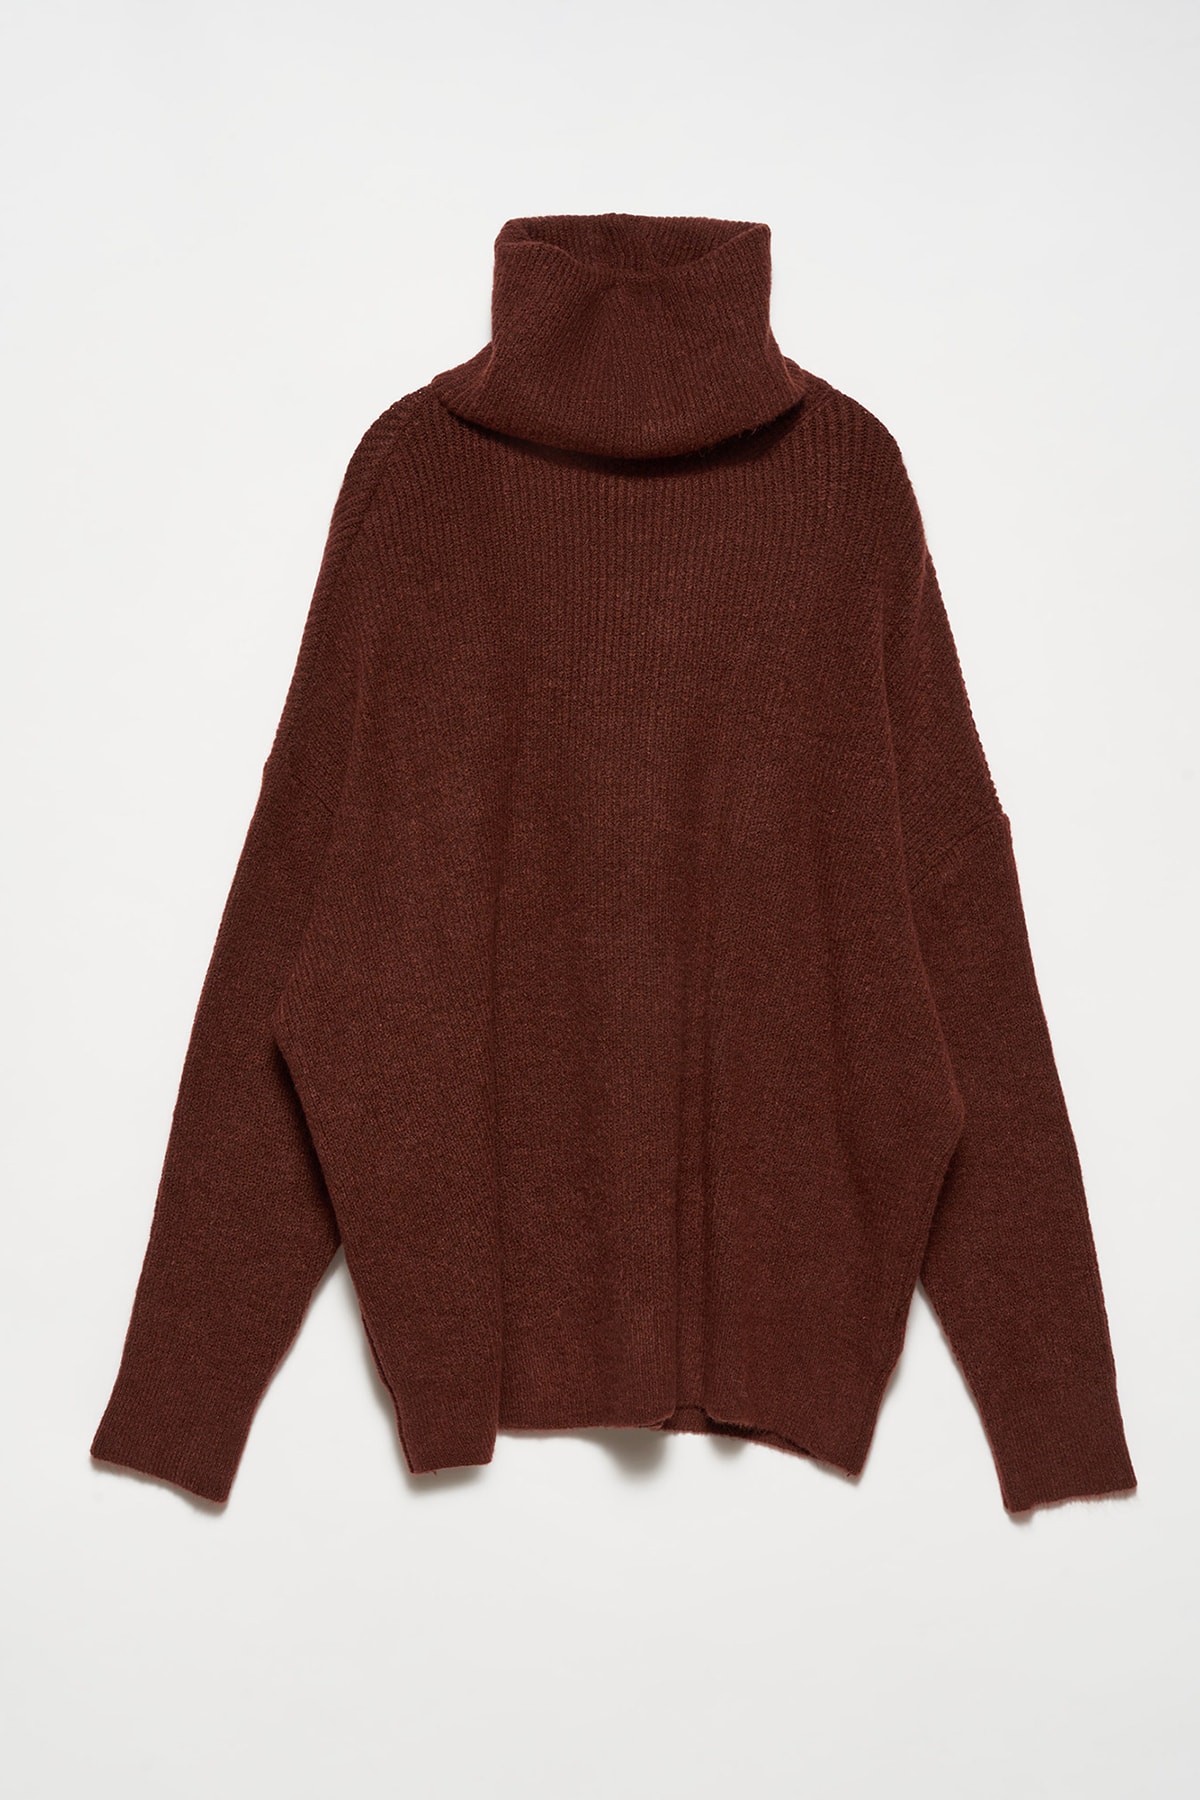 discount 76% Brown L WOMEN FASHION Jumpers & Sweatshirts Sweatshirt Basic NIRVANA sweatshirt 